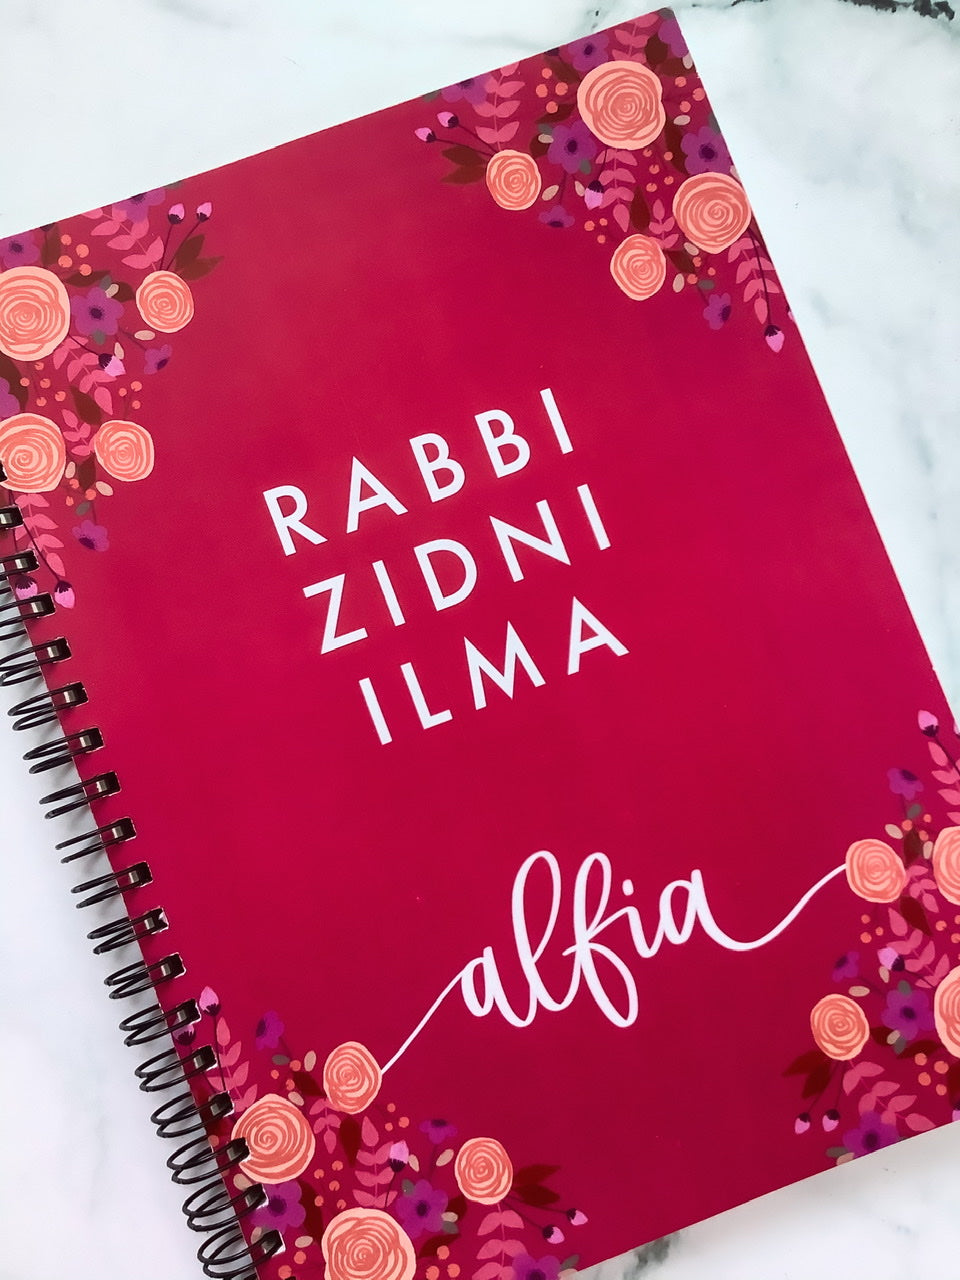 Rabbi Zidni Ilma Floral Notebook - Personalized